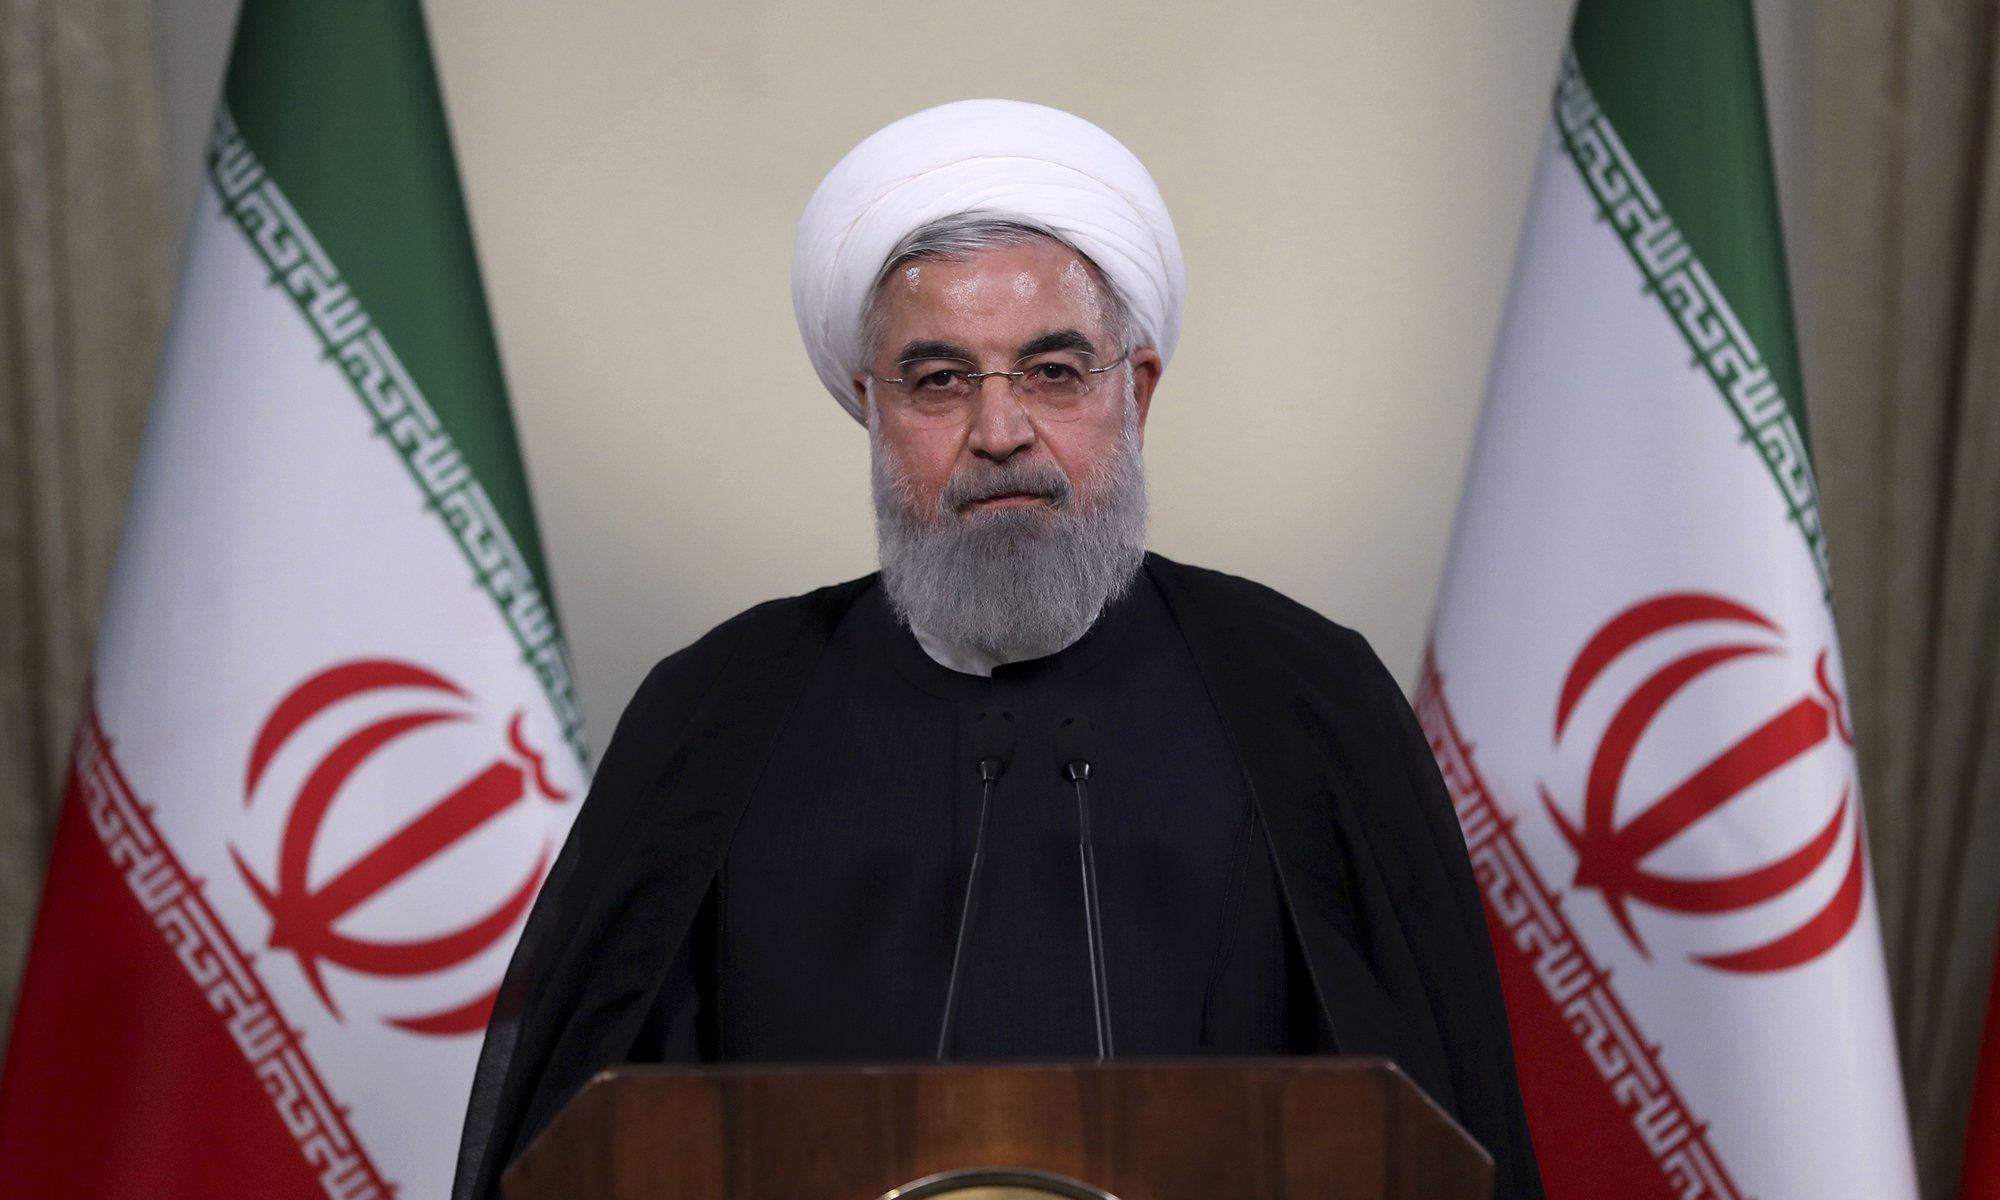 Al-Arabia: Iran is not invited to Lebanon’s aid conference